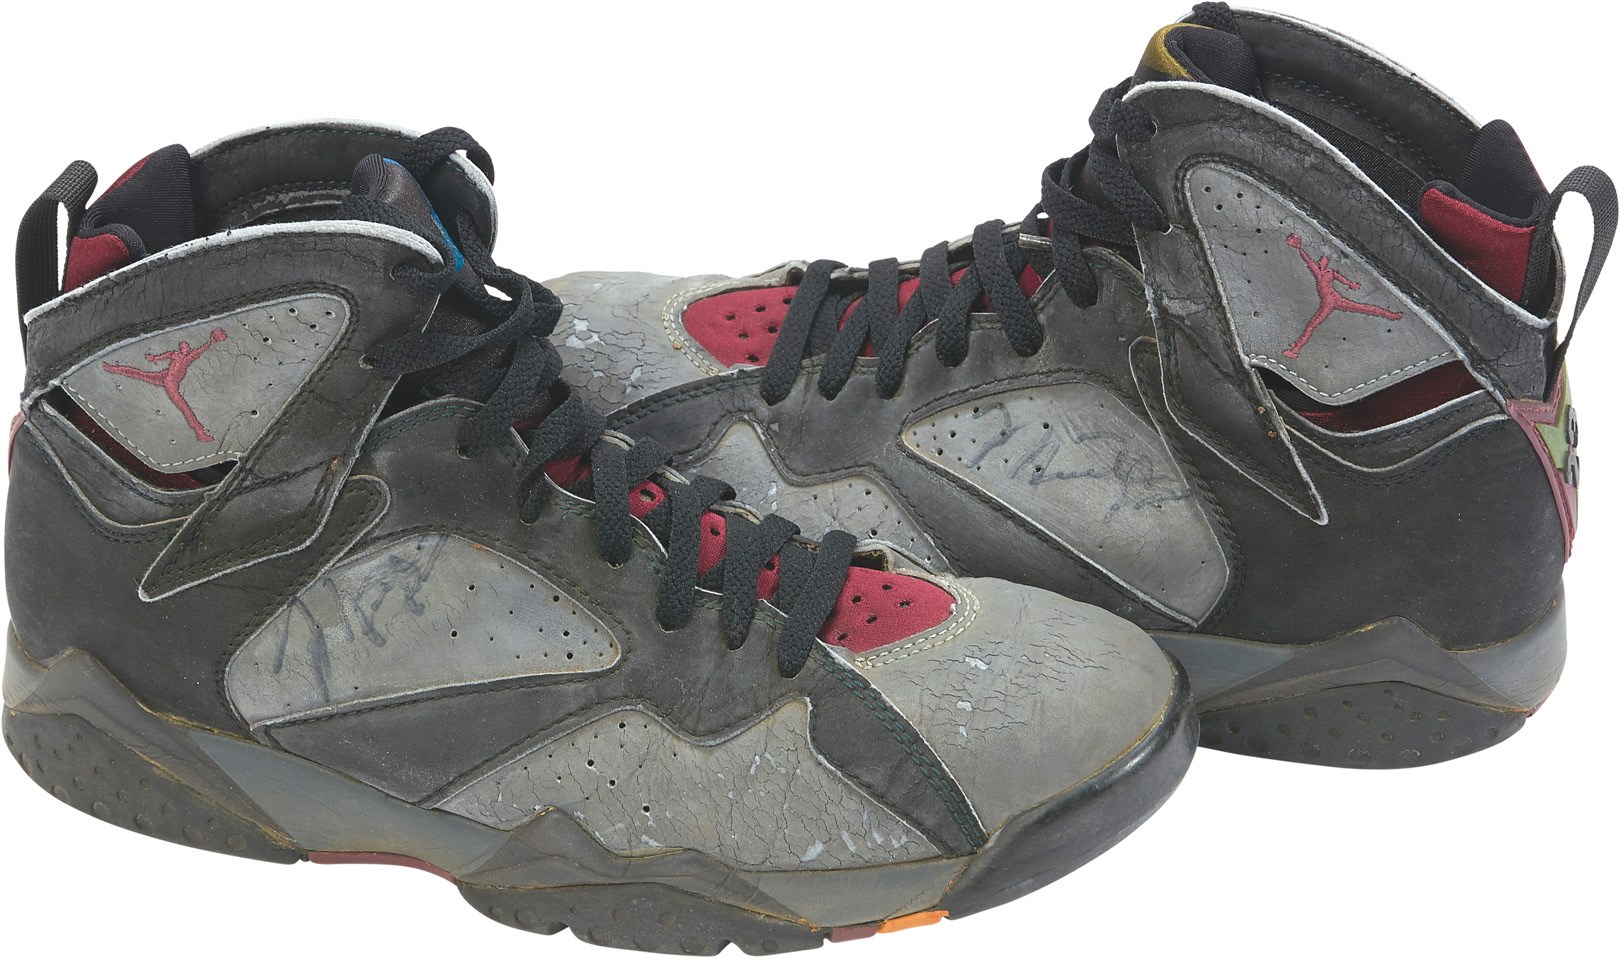 - 1992 Michael Jordan Signed "Make a Wish" Sneakers w/Exact Proof of Signing (JSA)